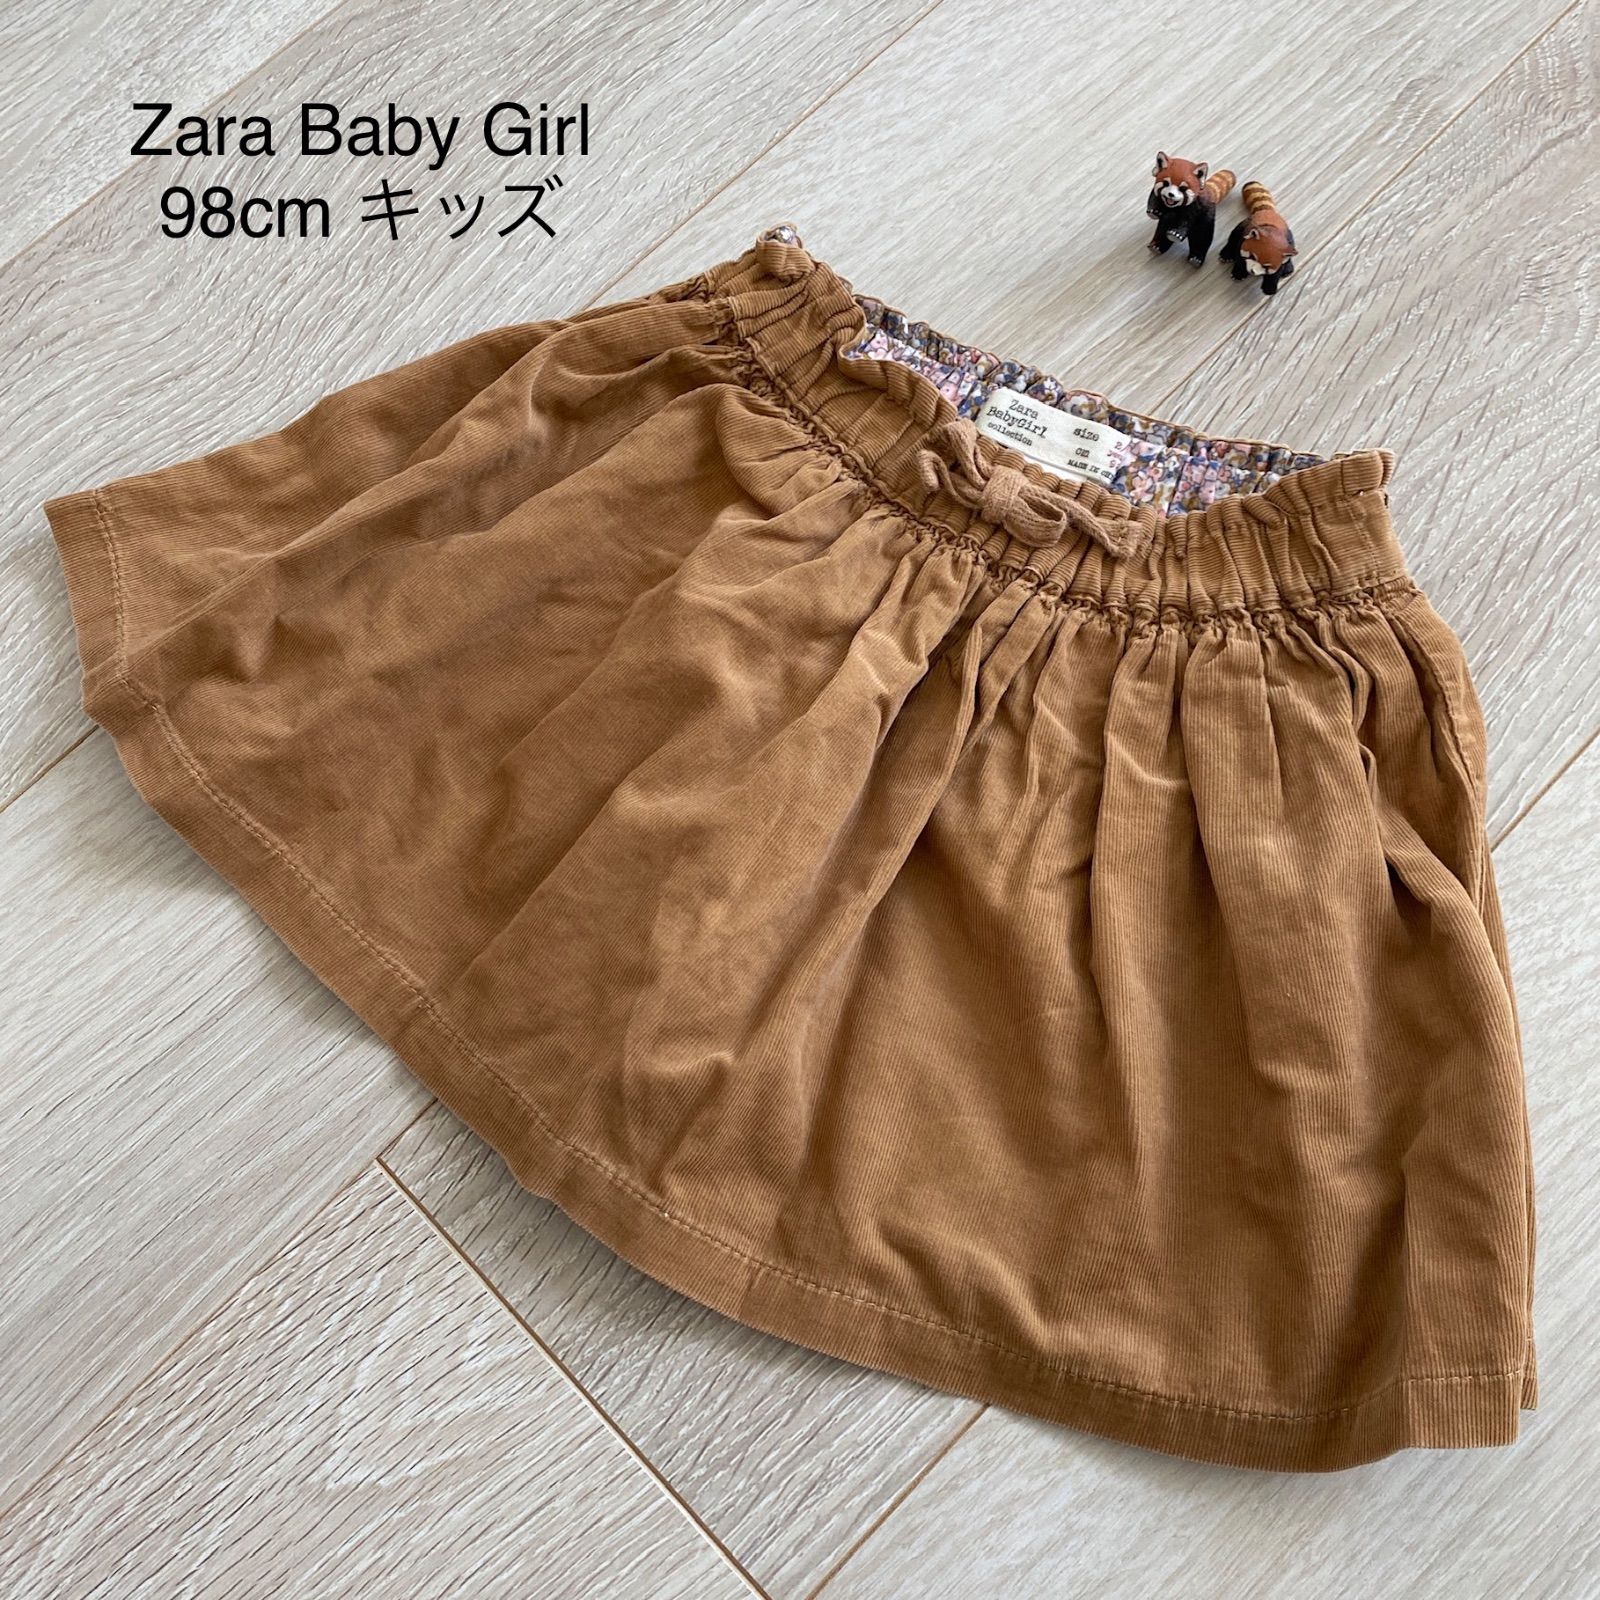 Zara Baby Girl ザラベイビー コーデュロイ スカート 98cm キャメル 幼児 キッズ 子供服 Abcb メルカリ